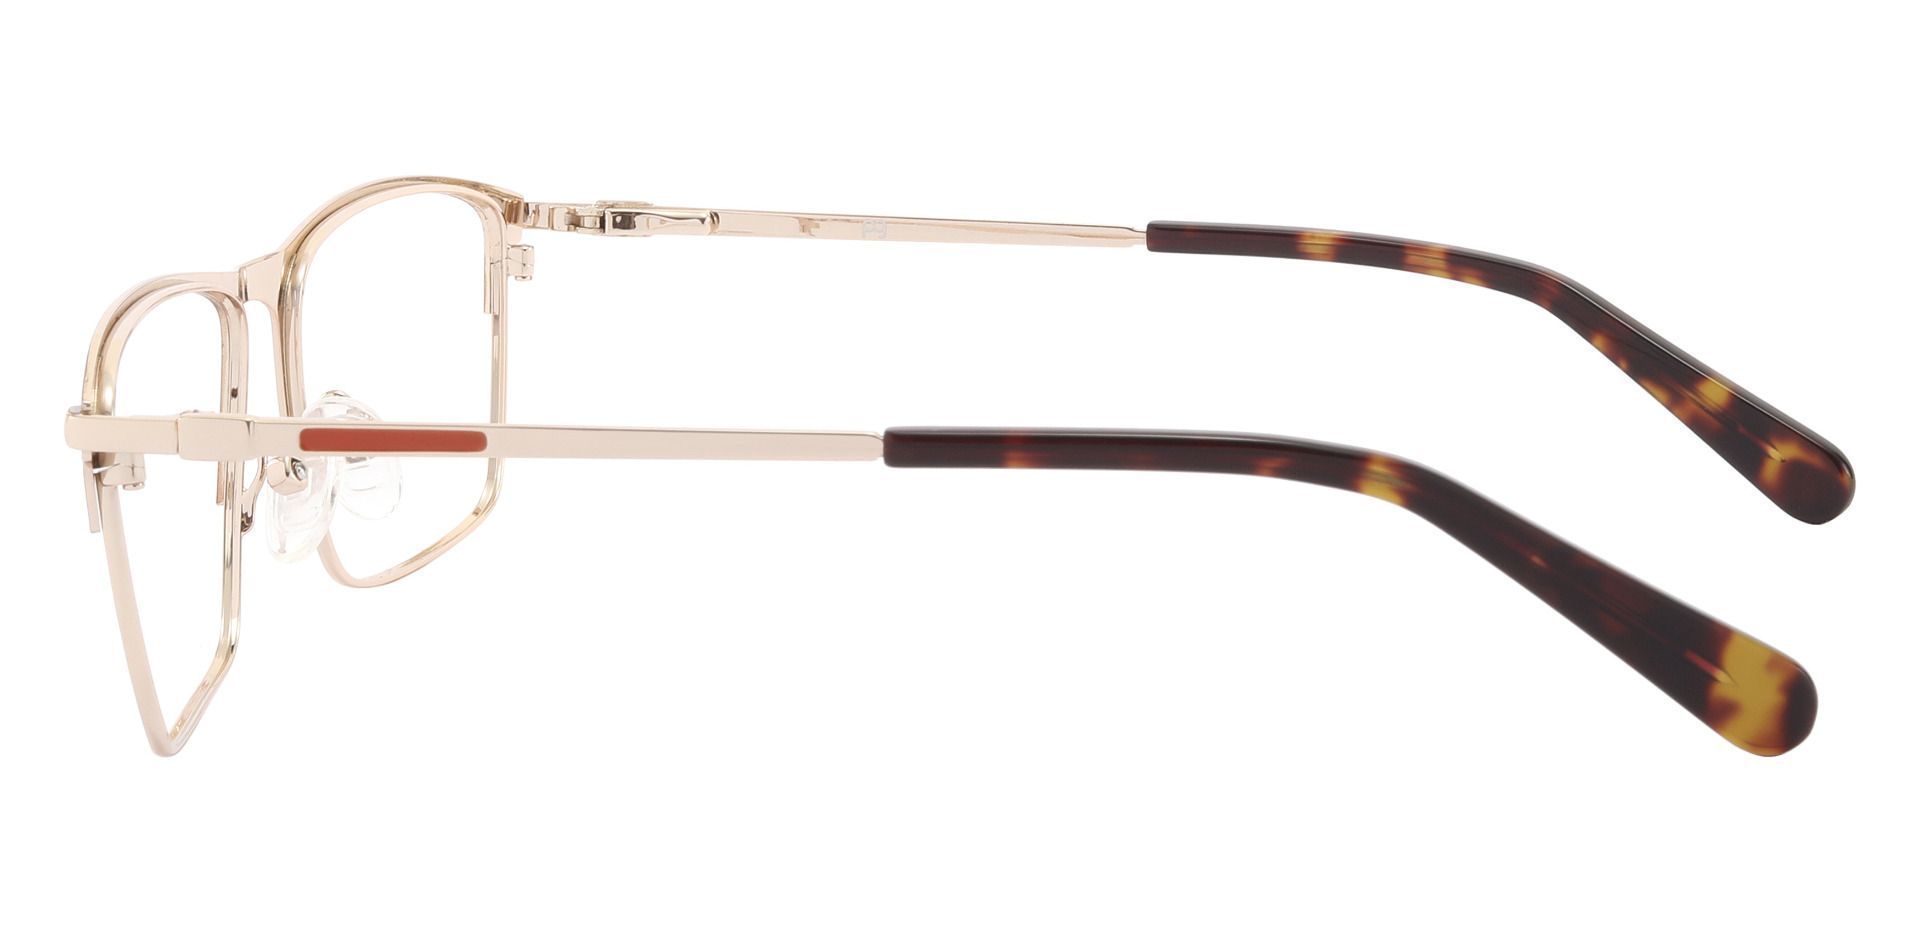 Thorpe Rectangle Eyeglasses Frame - Brown